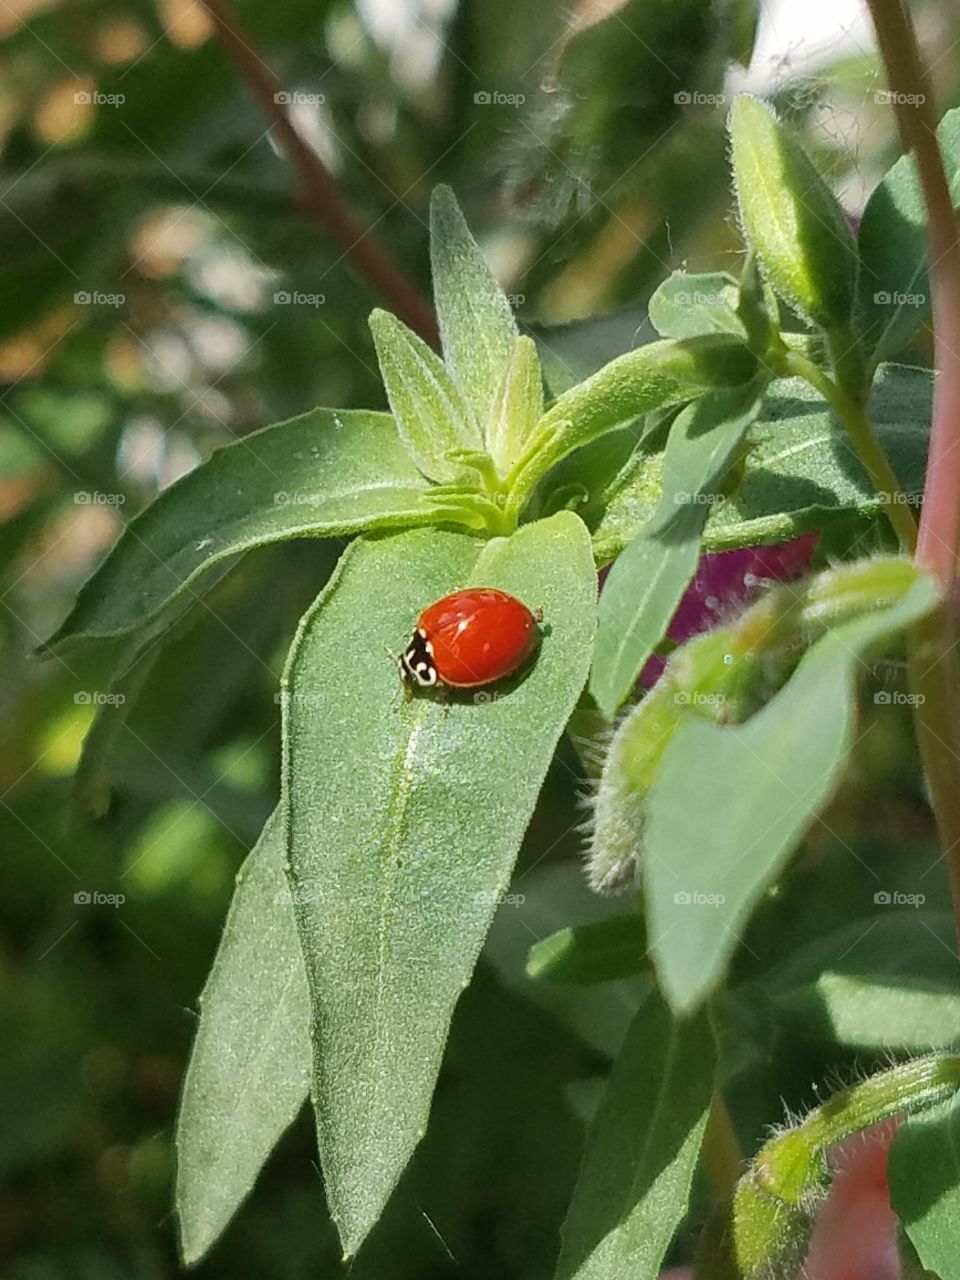 A ladybug?